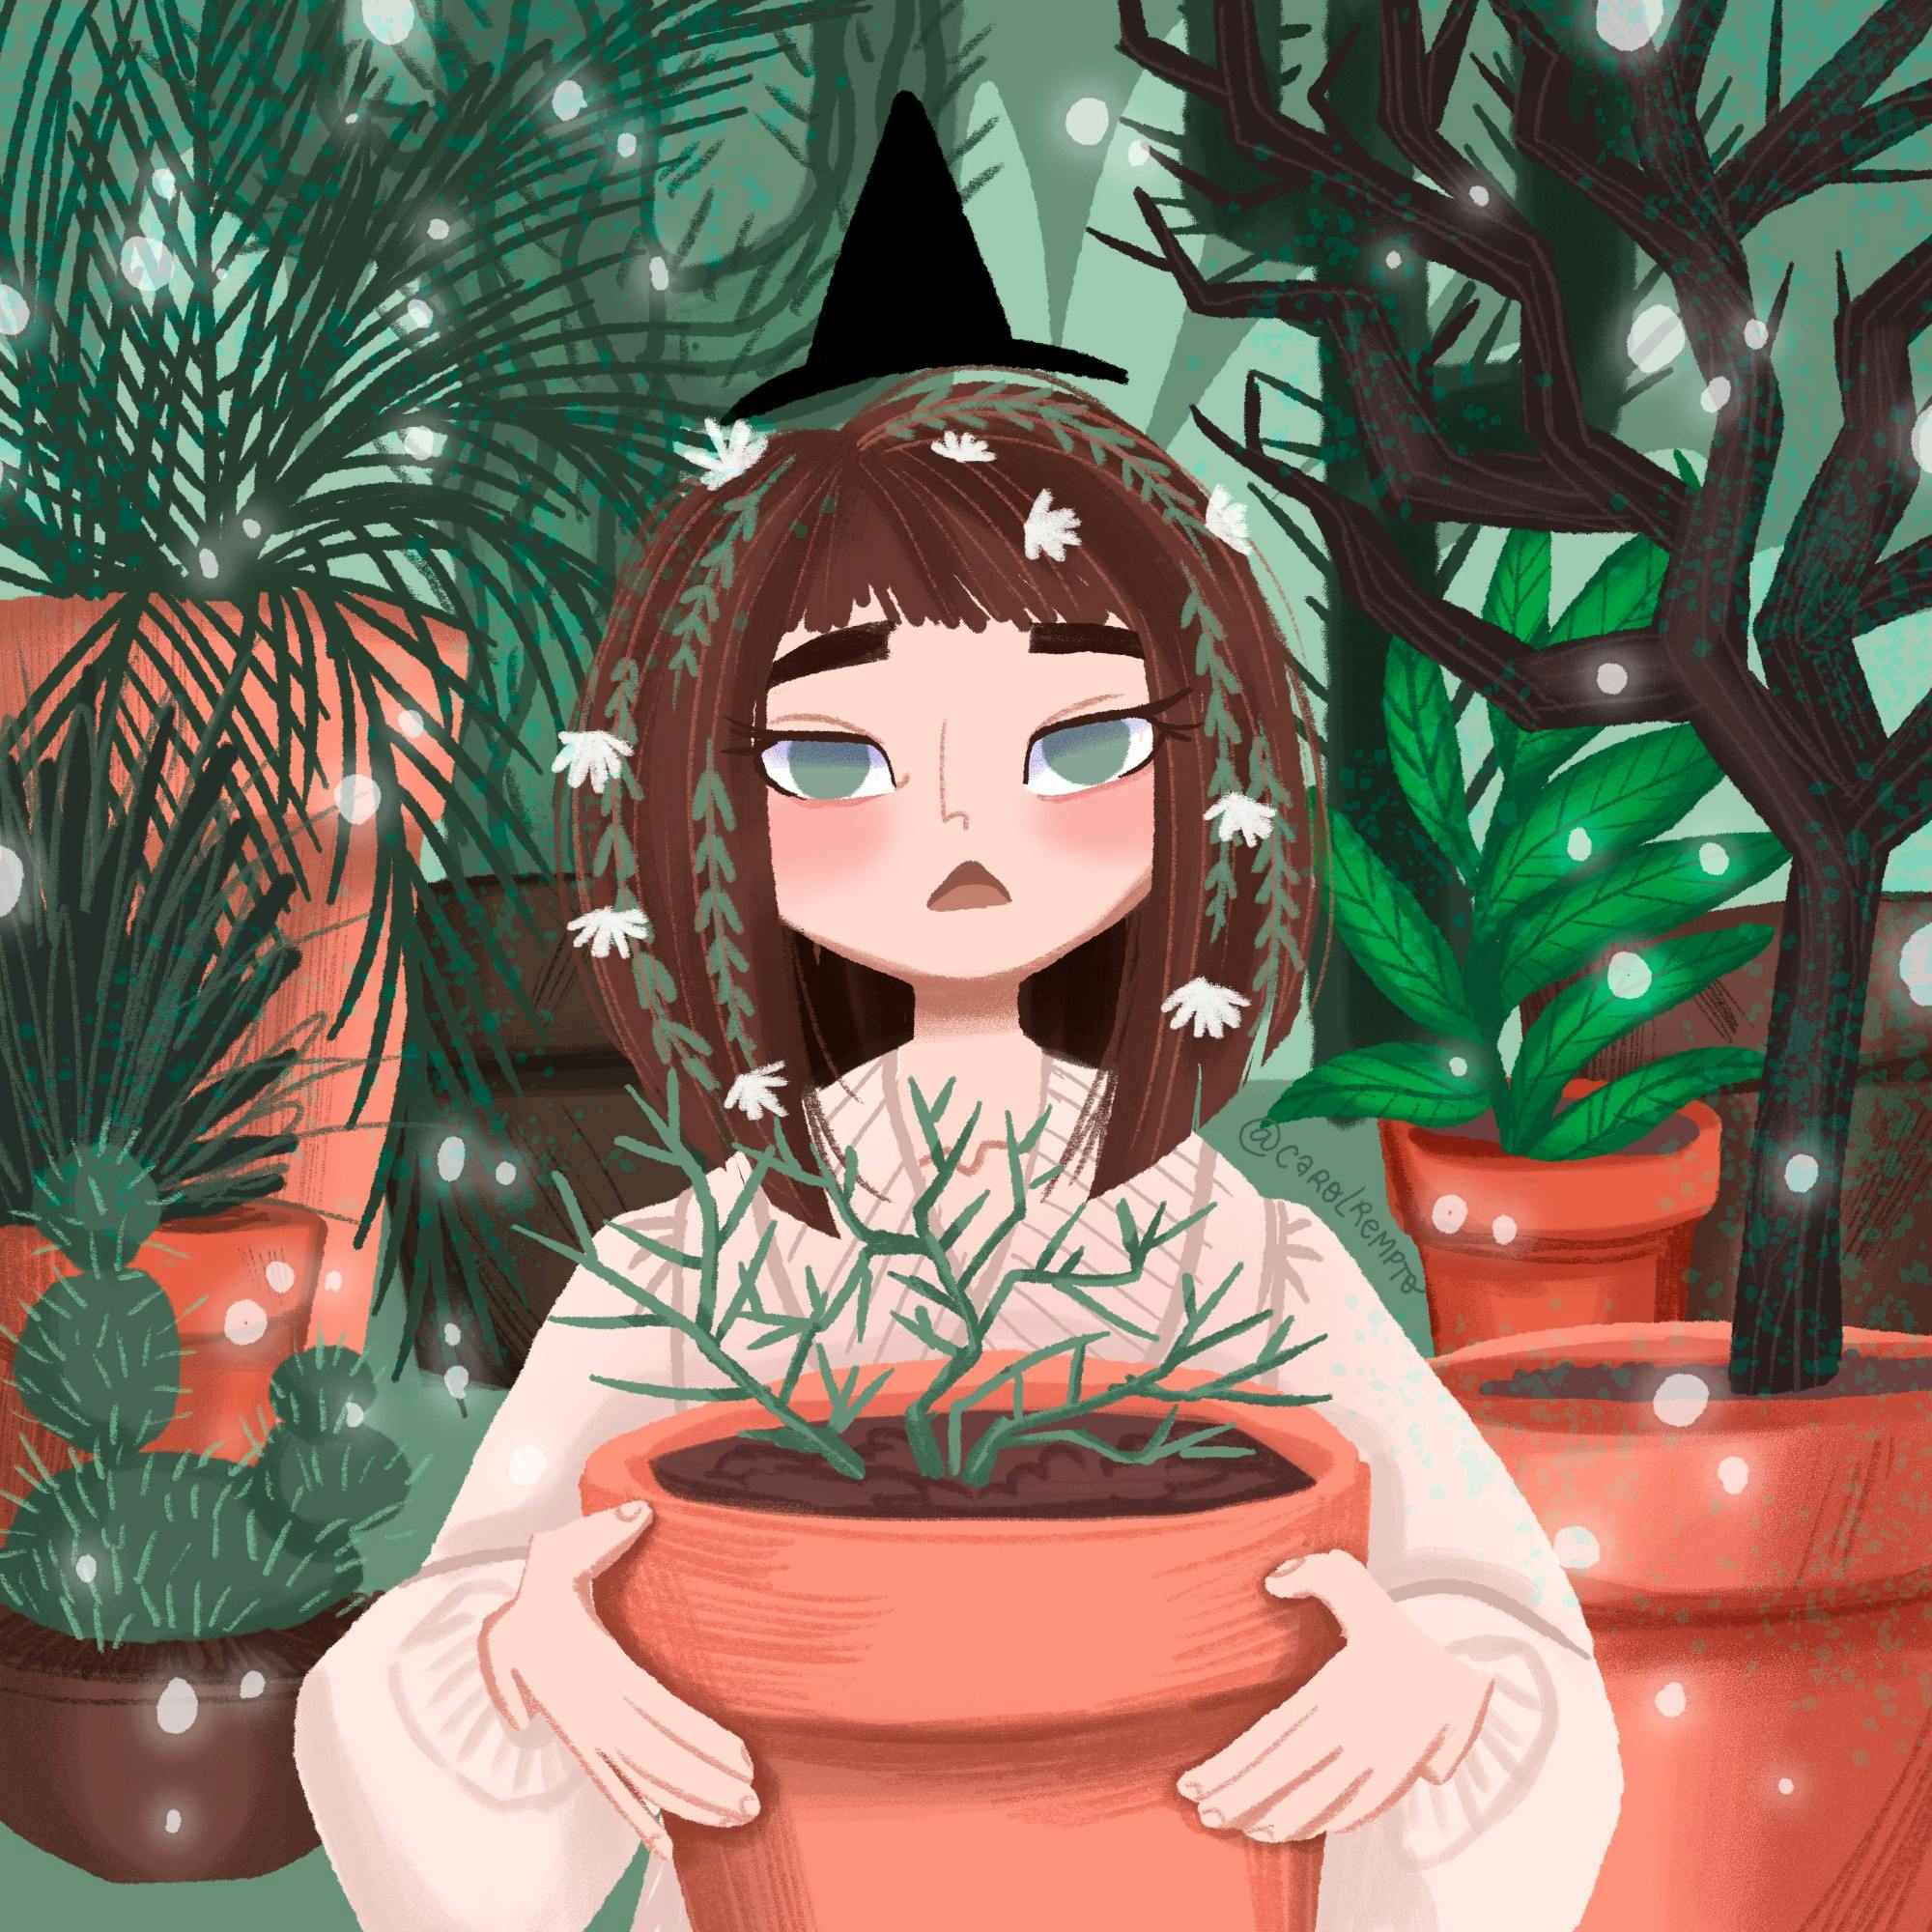 A girl with a pot